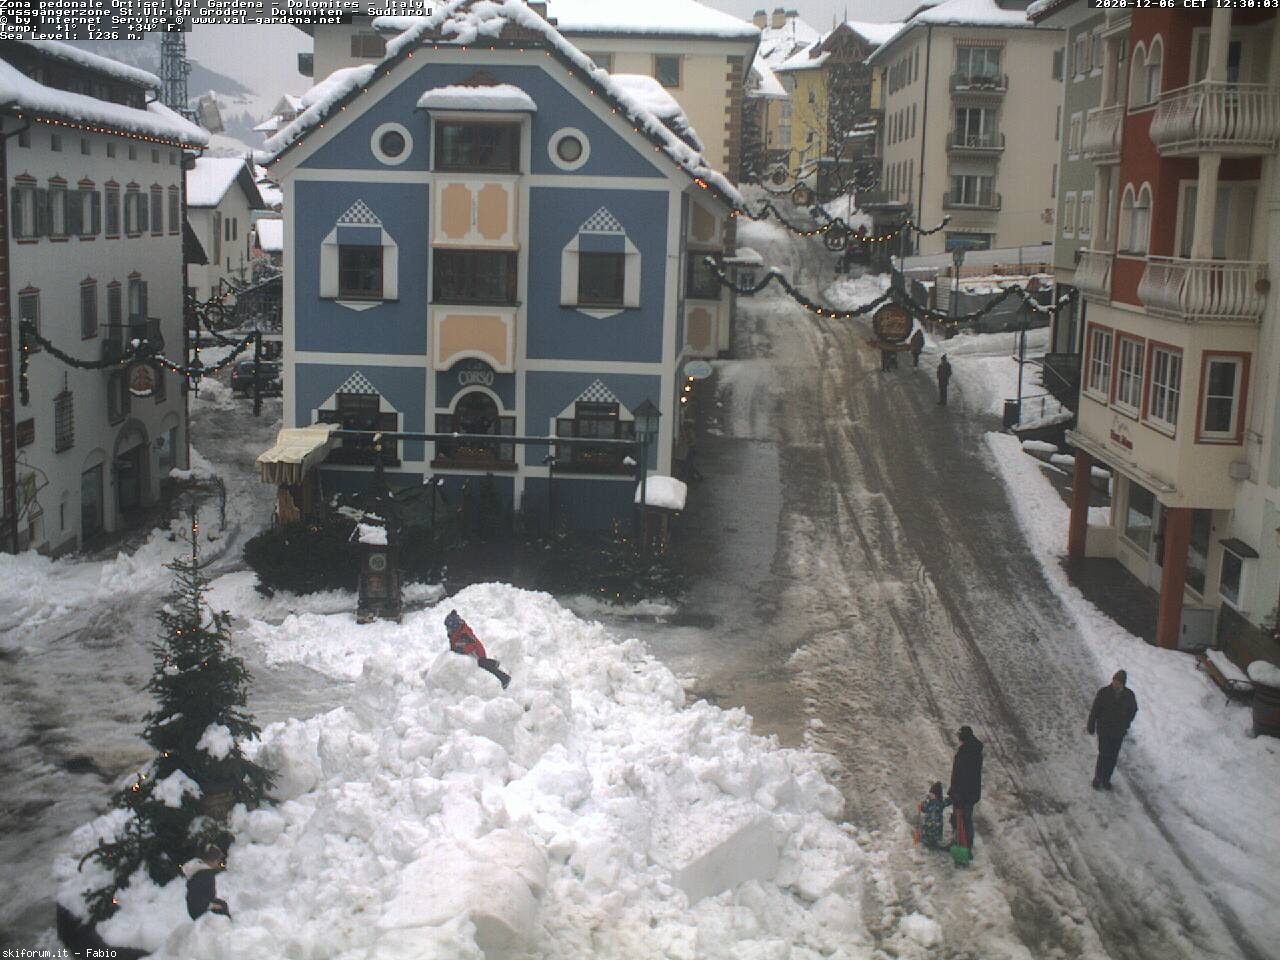 281339-neve-6-dicembre-2020-webcam.jpg